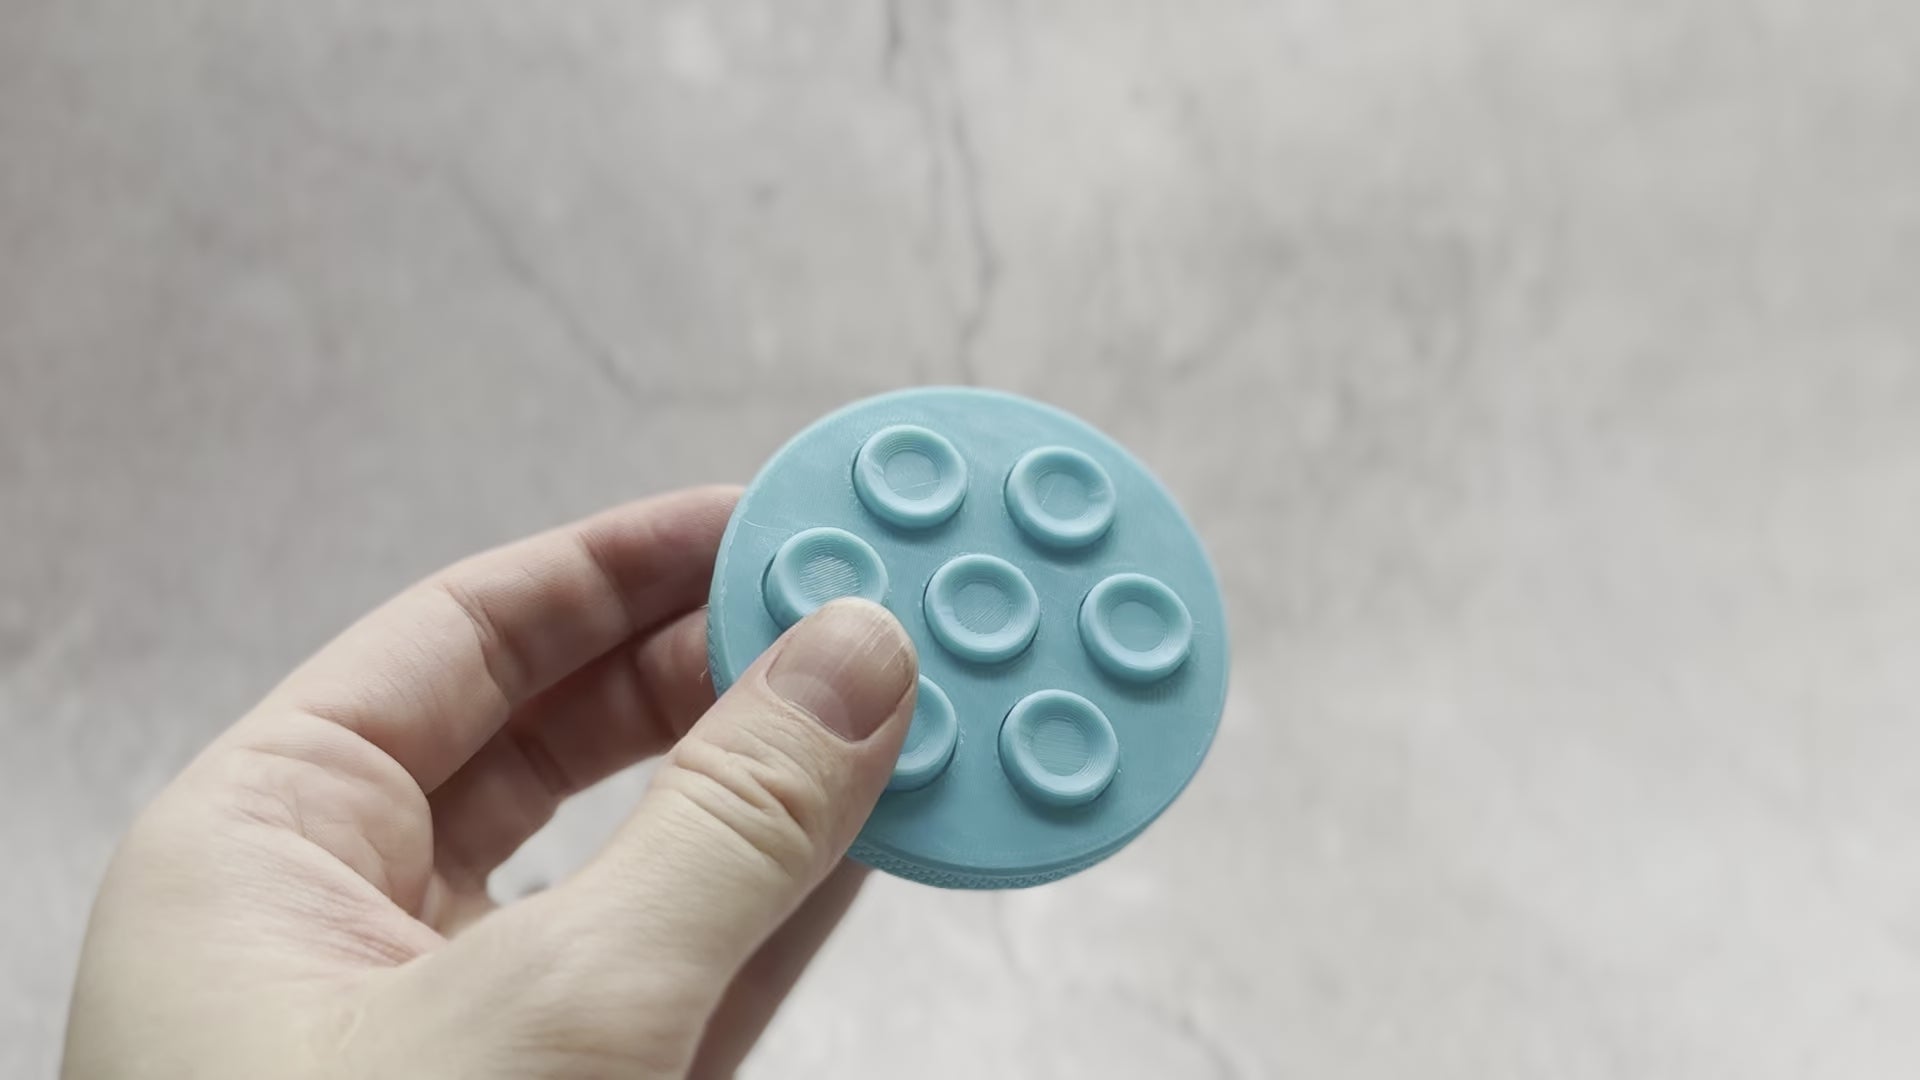 Green Plastic 5 Button Pop Fidget Spinner Toy